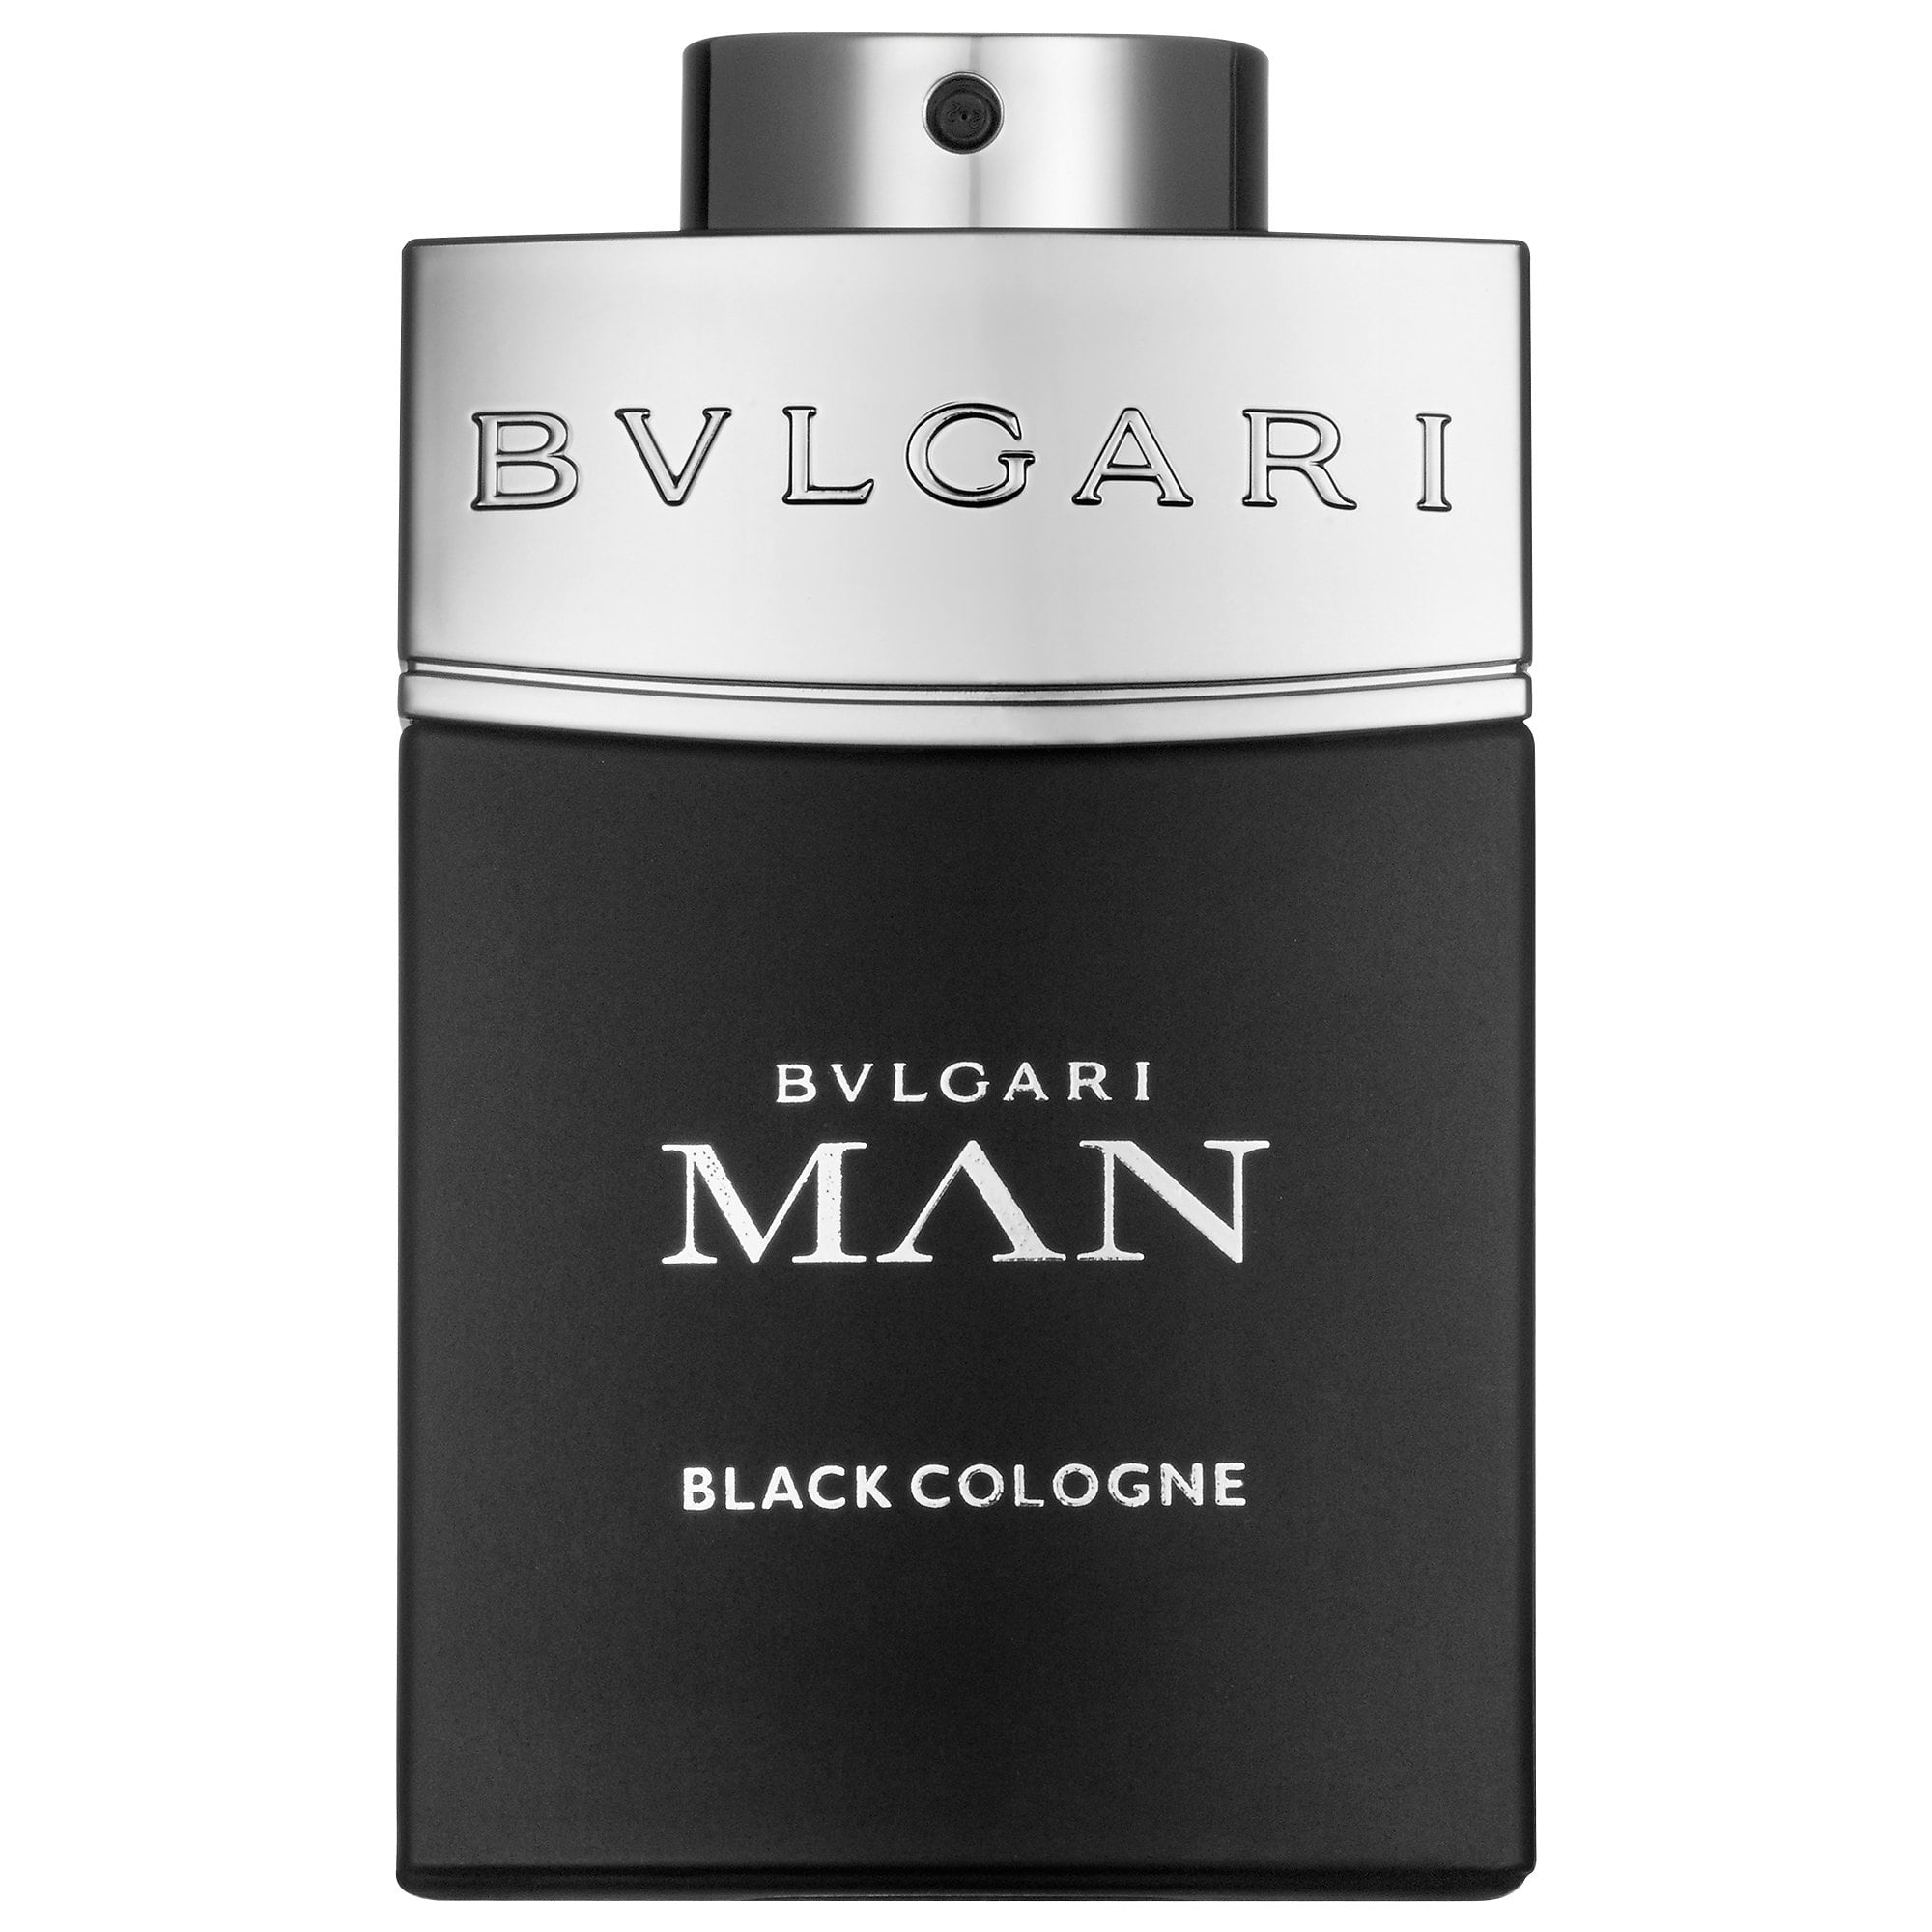 bvlgari black cologne man